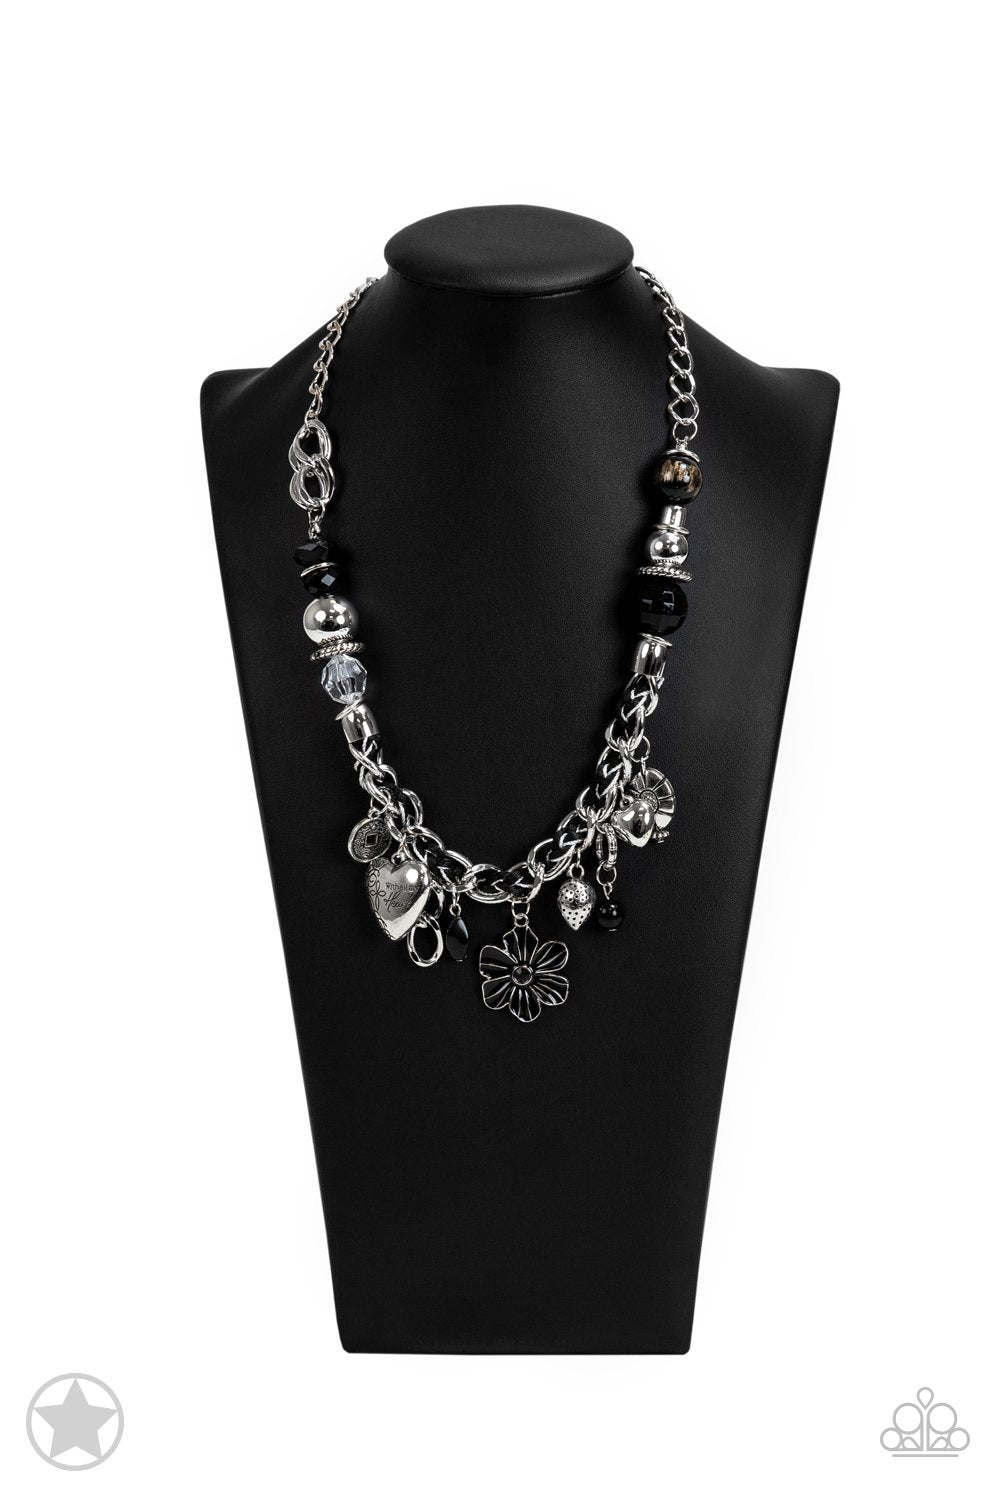 Personalized Padlock Necklace - OurCoordinates Black / 45 cm